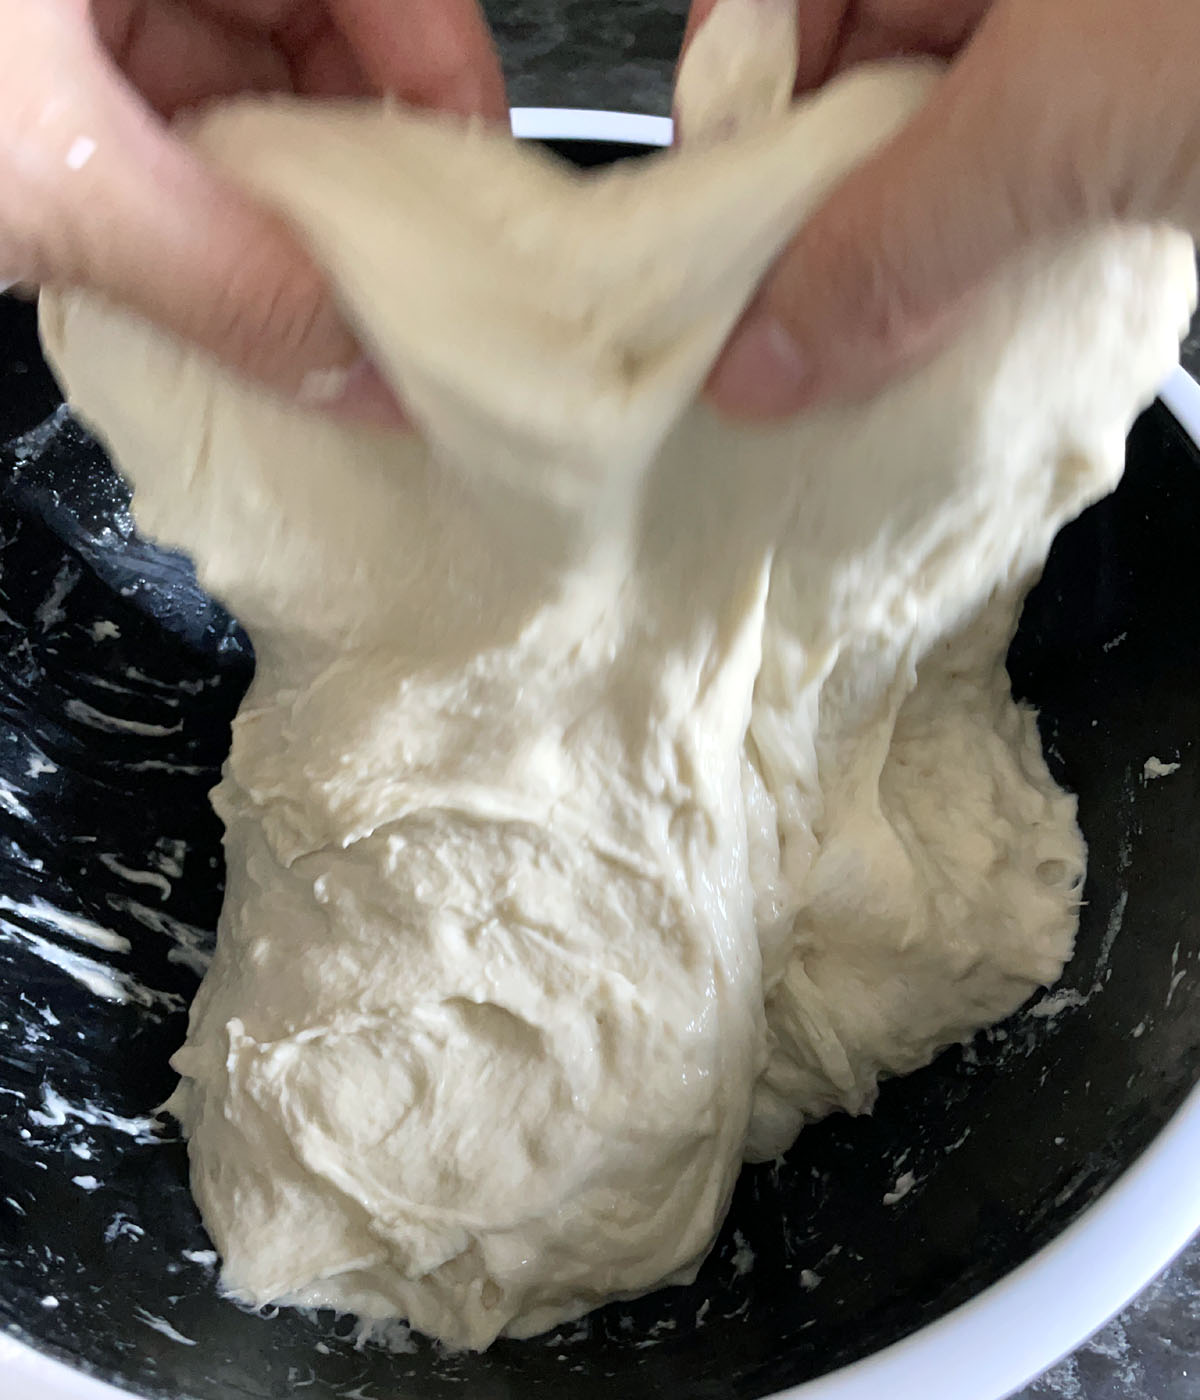 Two hands stretching dough upward over a dark round bowl.